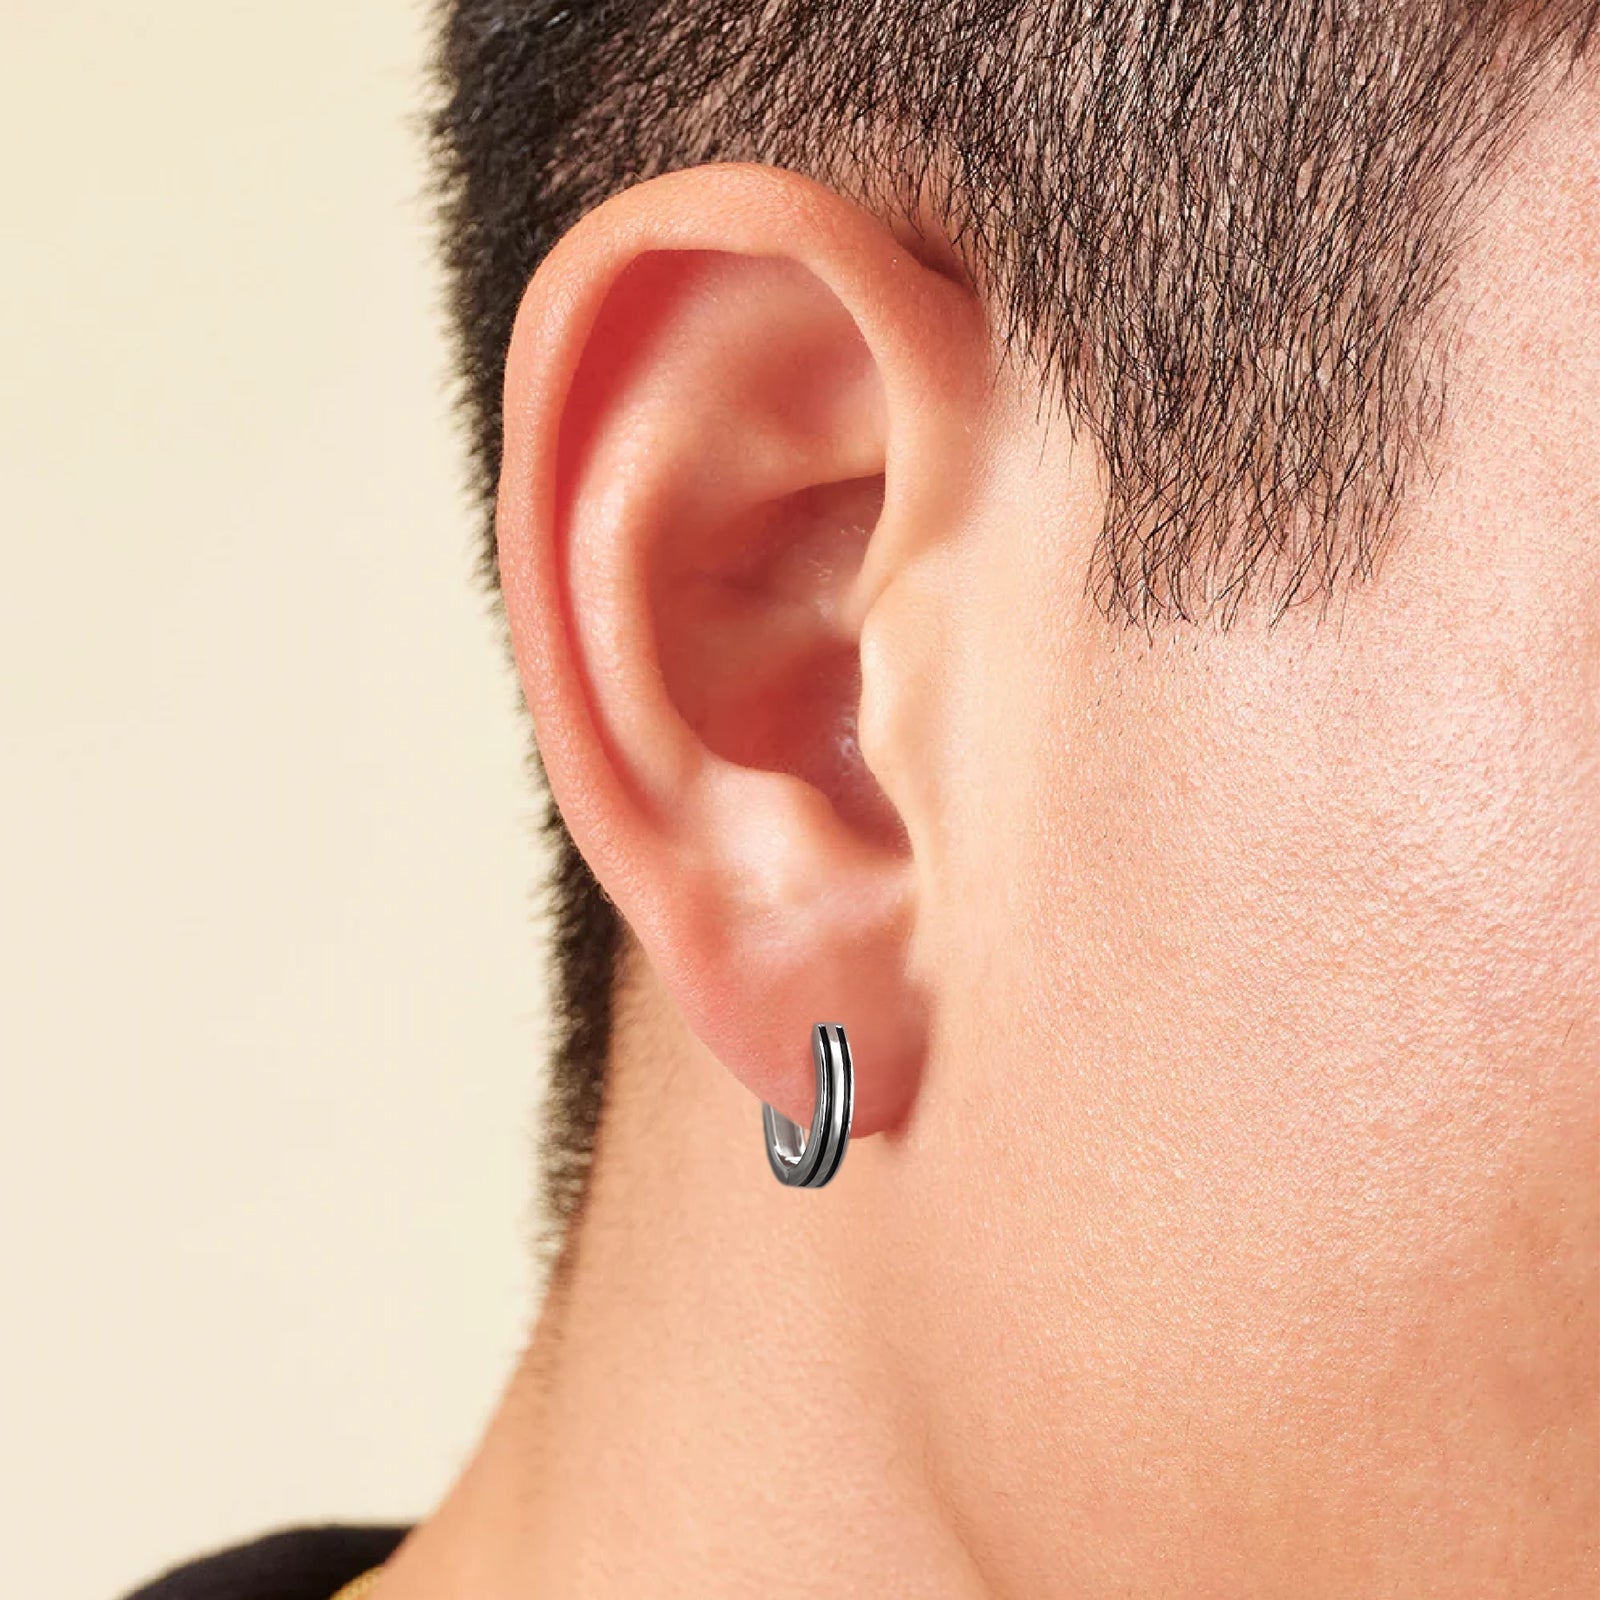 Wholesale Men's Earrings 15mm Sleek Black Stripe Hoop Earrings for Men